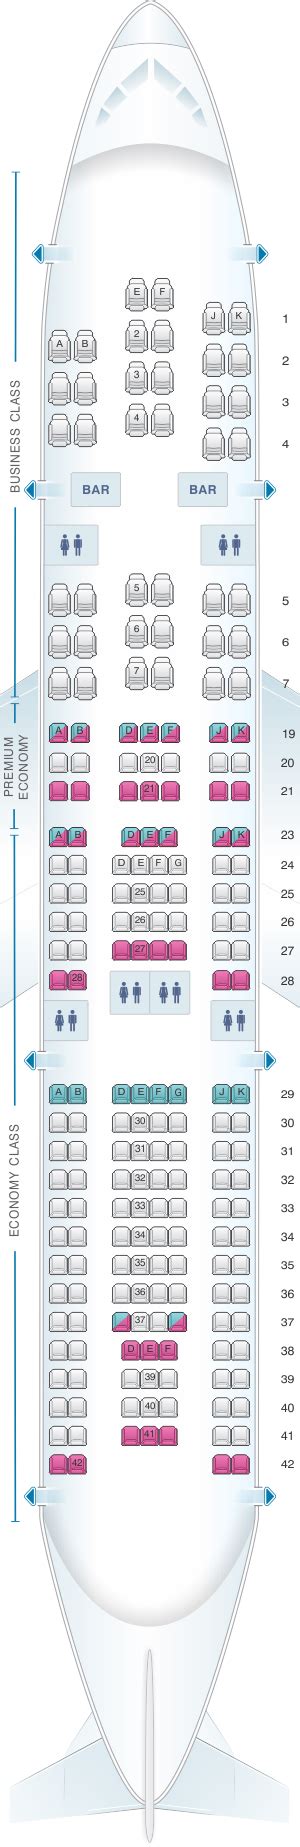 Seat Map Air France Airbus A330 200 Long Haul International 208pax